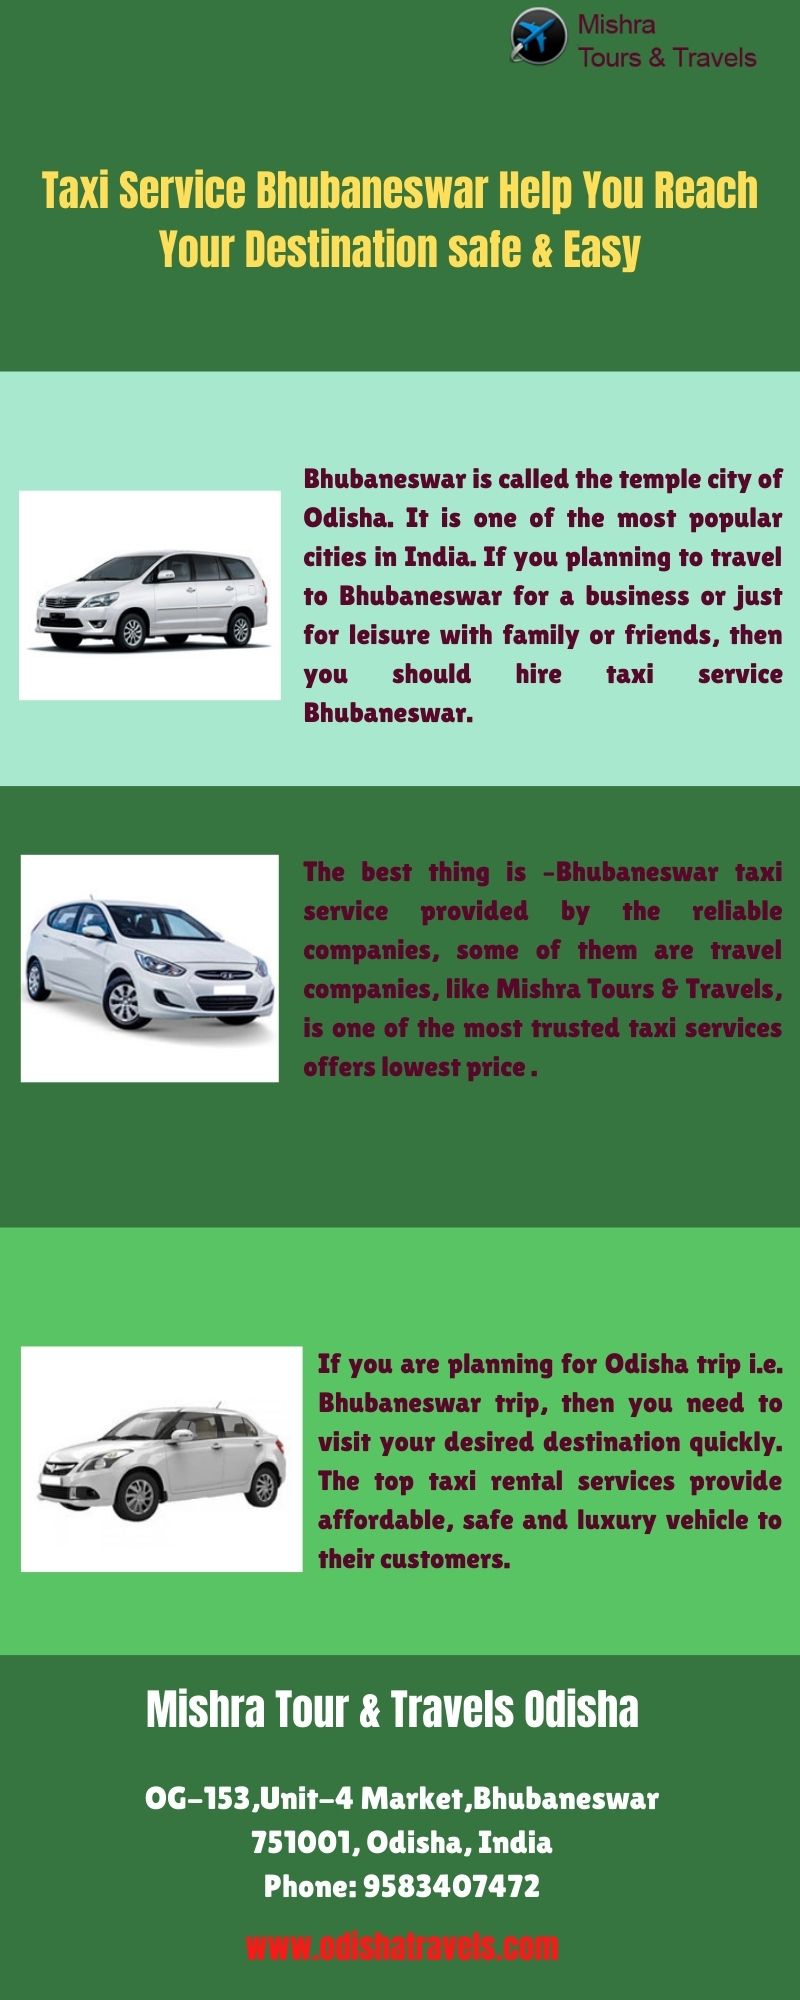 Taxi Service Bhubaneswar Help You Reach Your Destination Safe & Easy.jpg  by Odishatravels